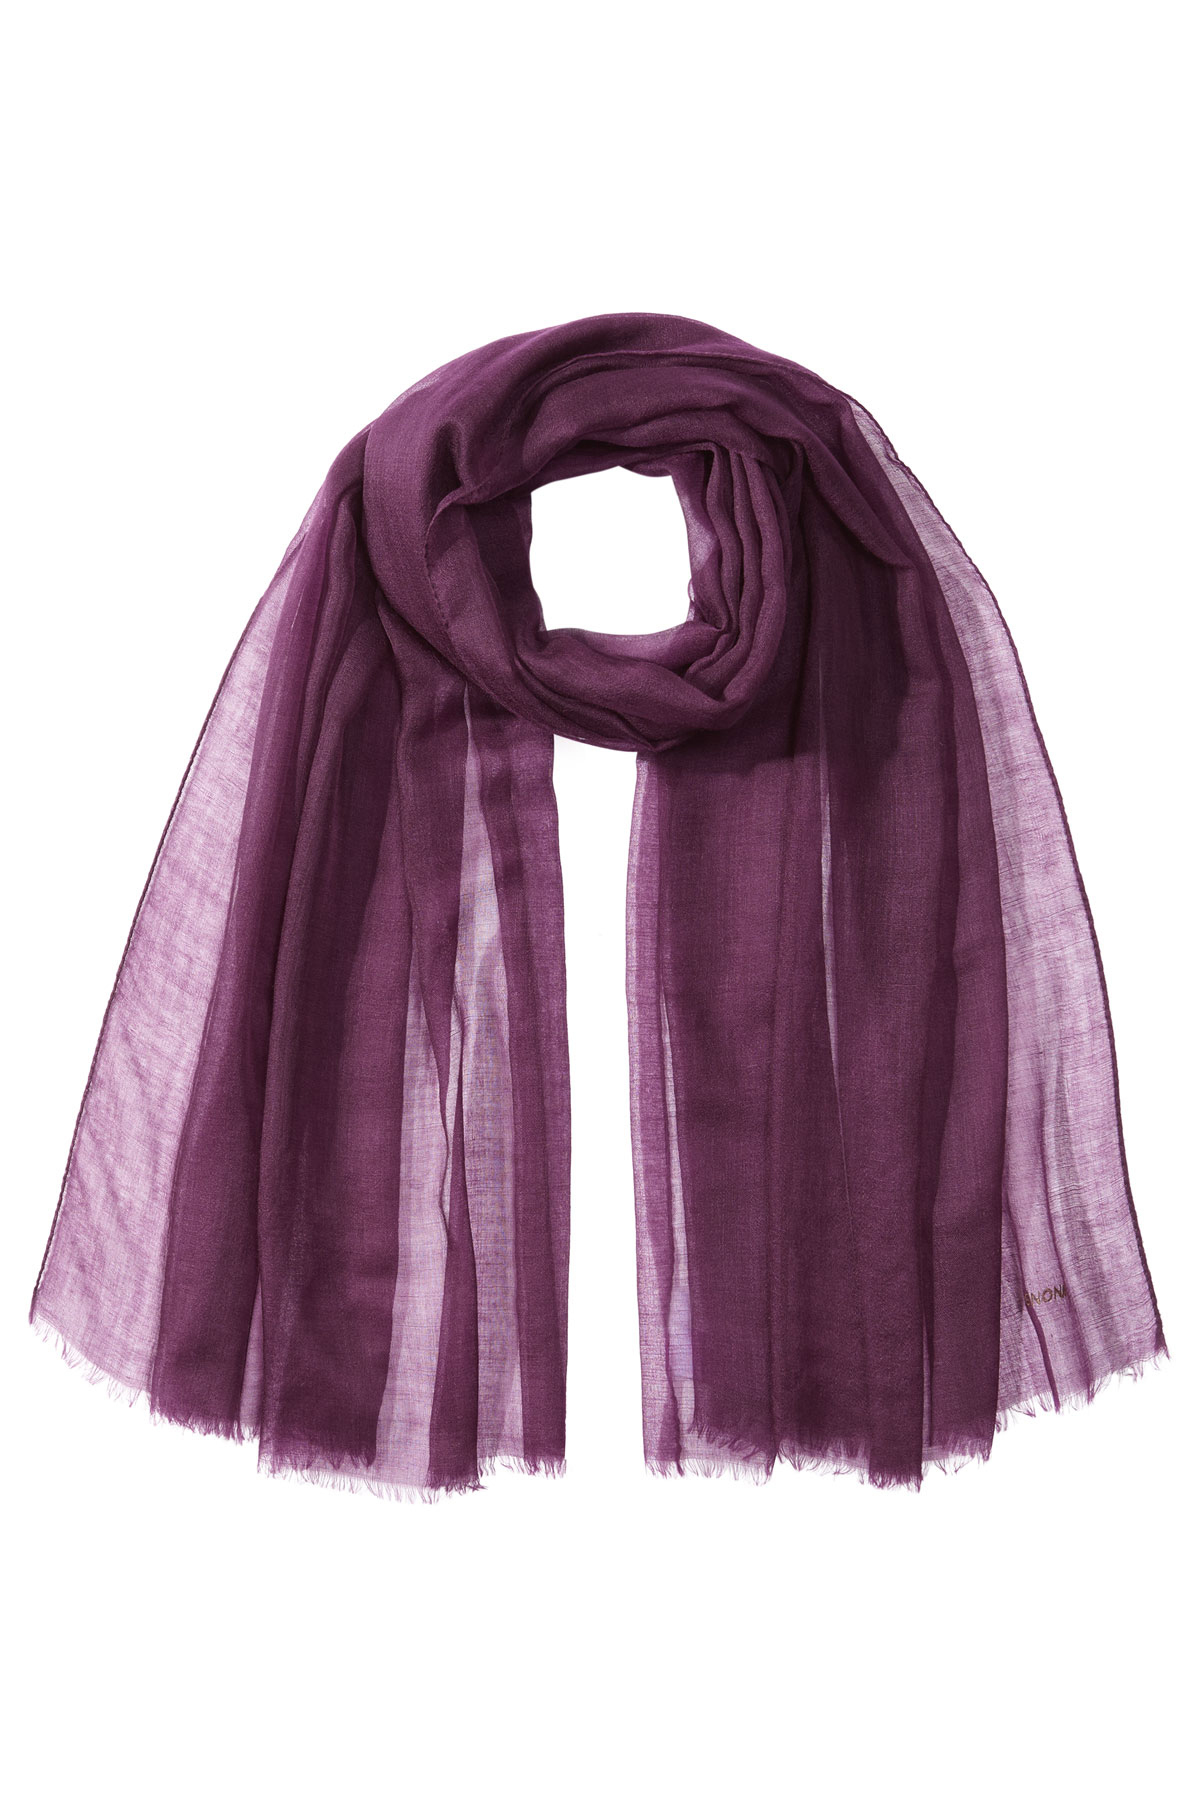 Agnona Cashmere Scarf in Purple - Save 6% | Lyst